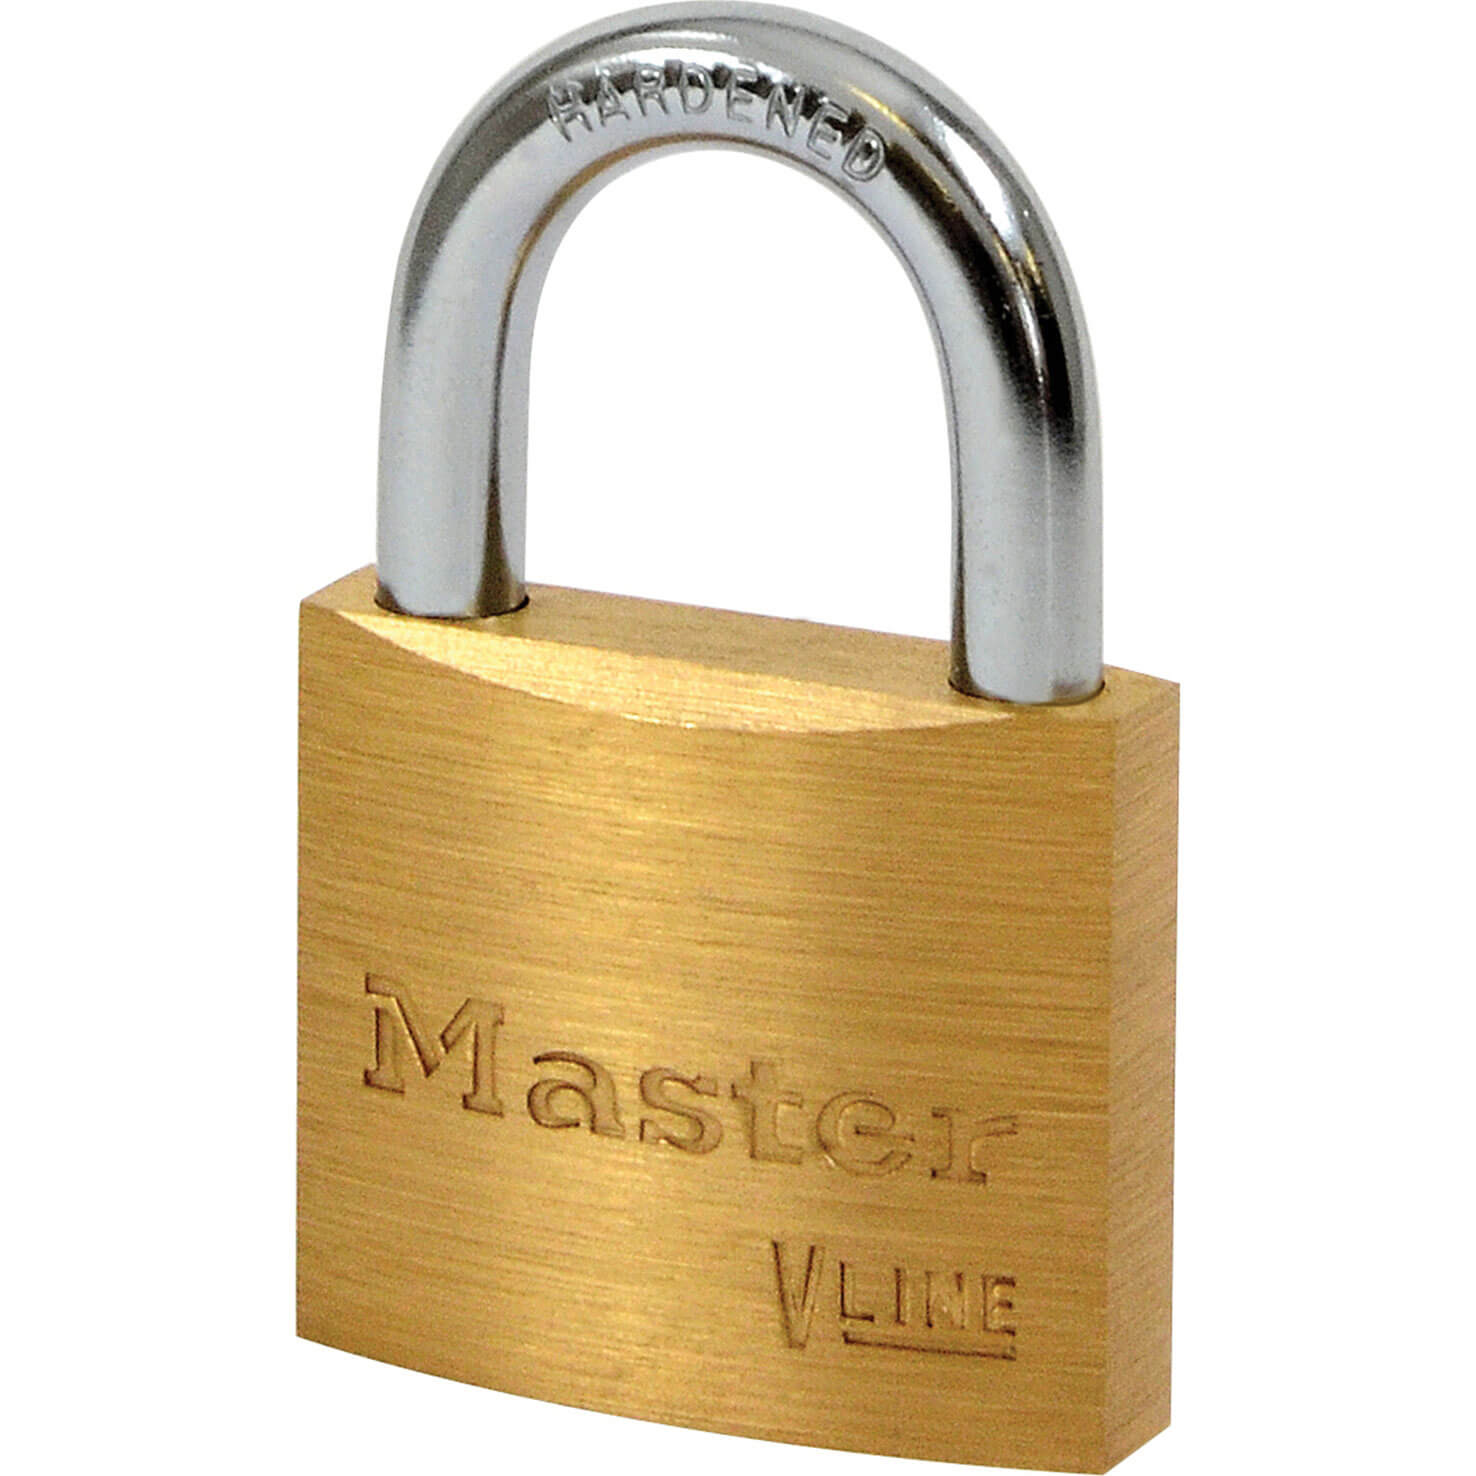 Image of Masterlock V Line Brass Padlock Keyed Alike 40mm Standard 4232